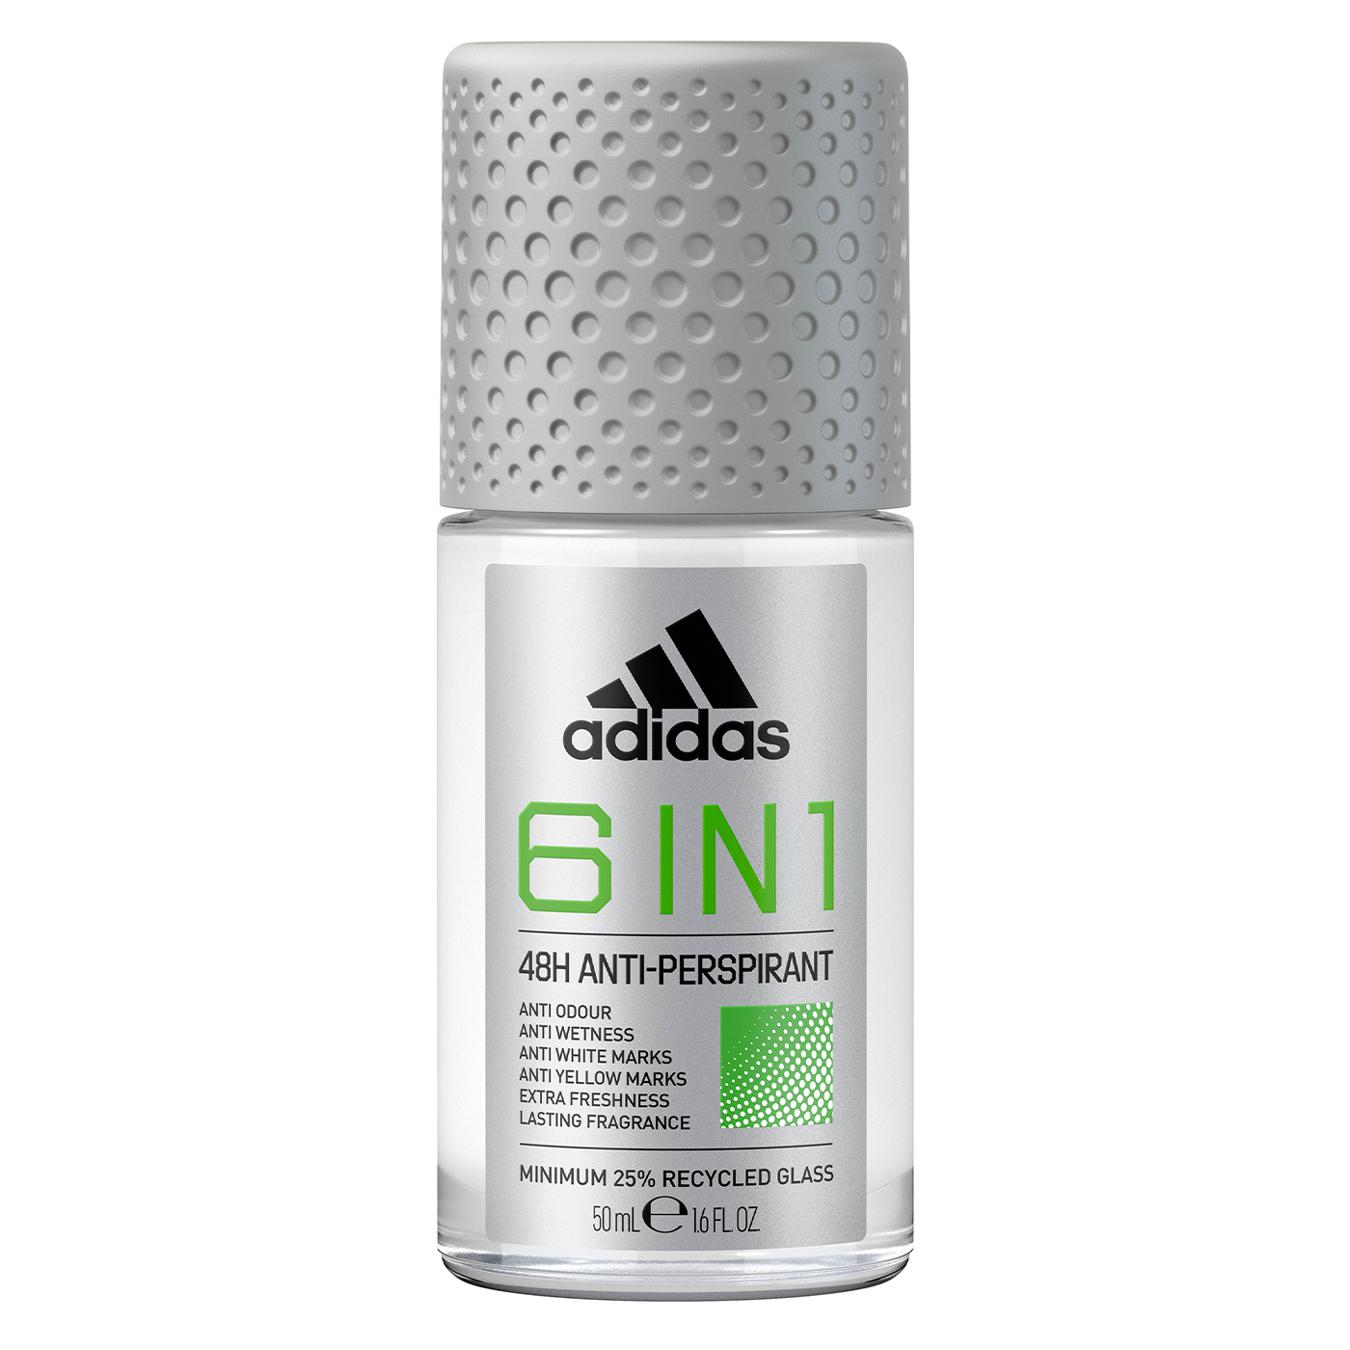 Adidas ball deodorant for men 6 in 1 50 ml